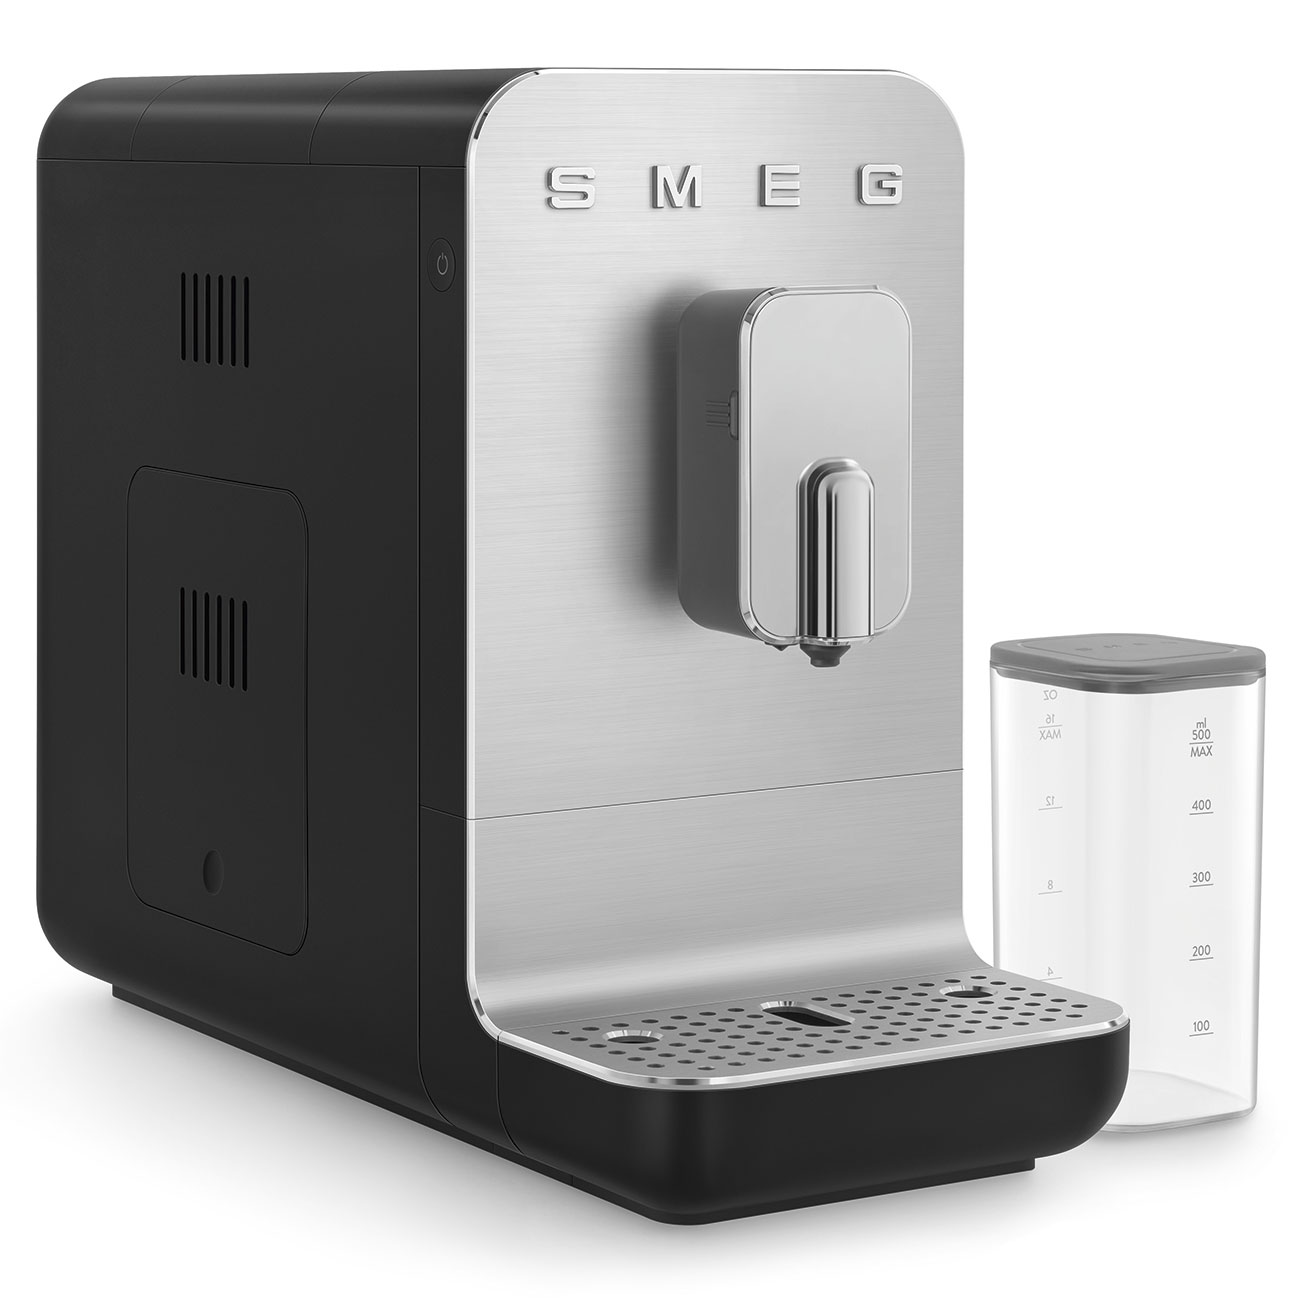 Smeg Black Espresso Automatic Coffee Machine with integrated milk system_3